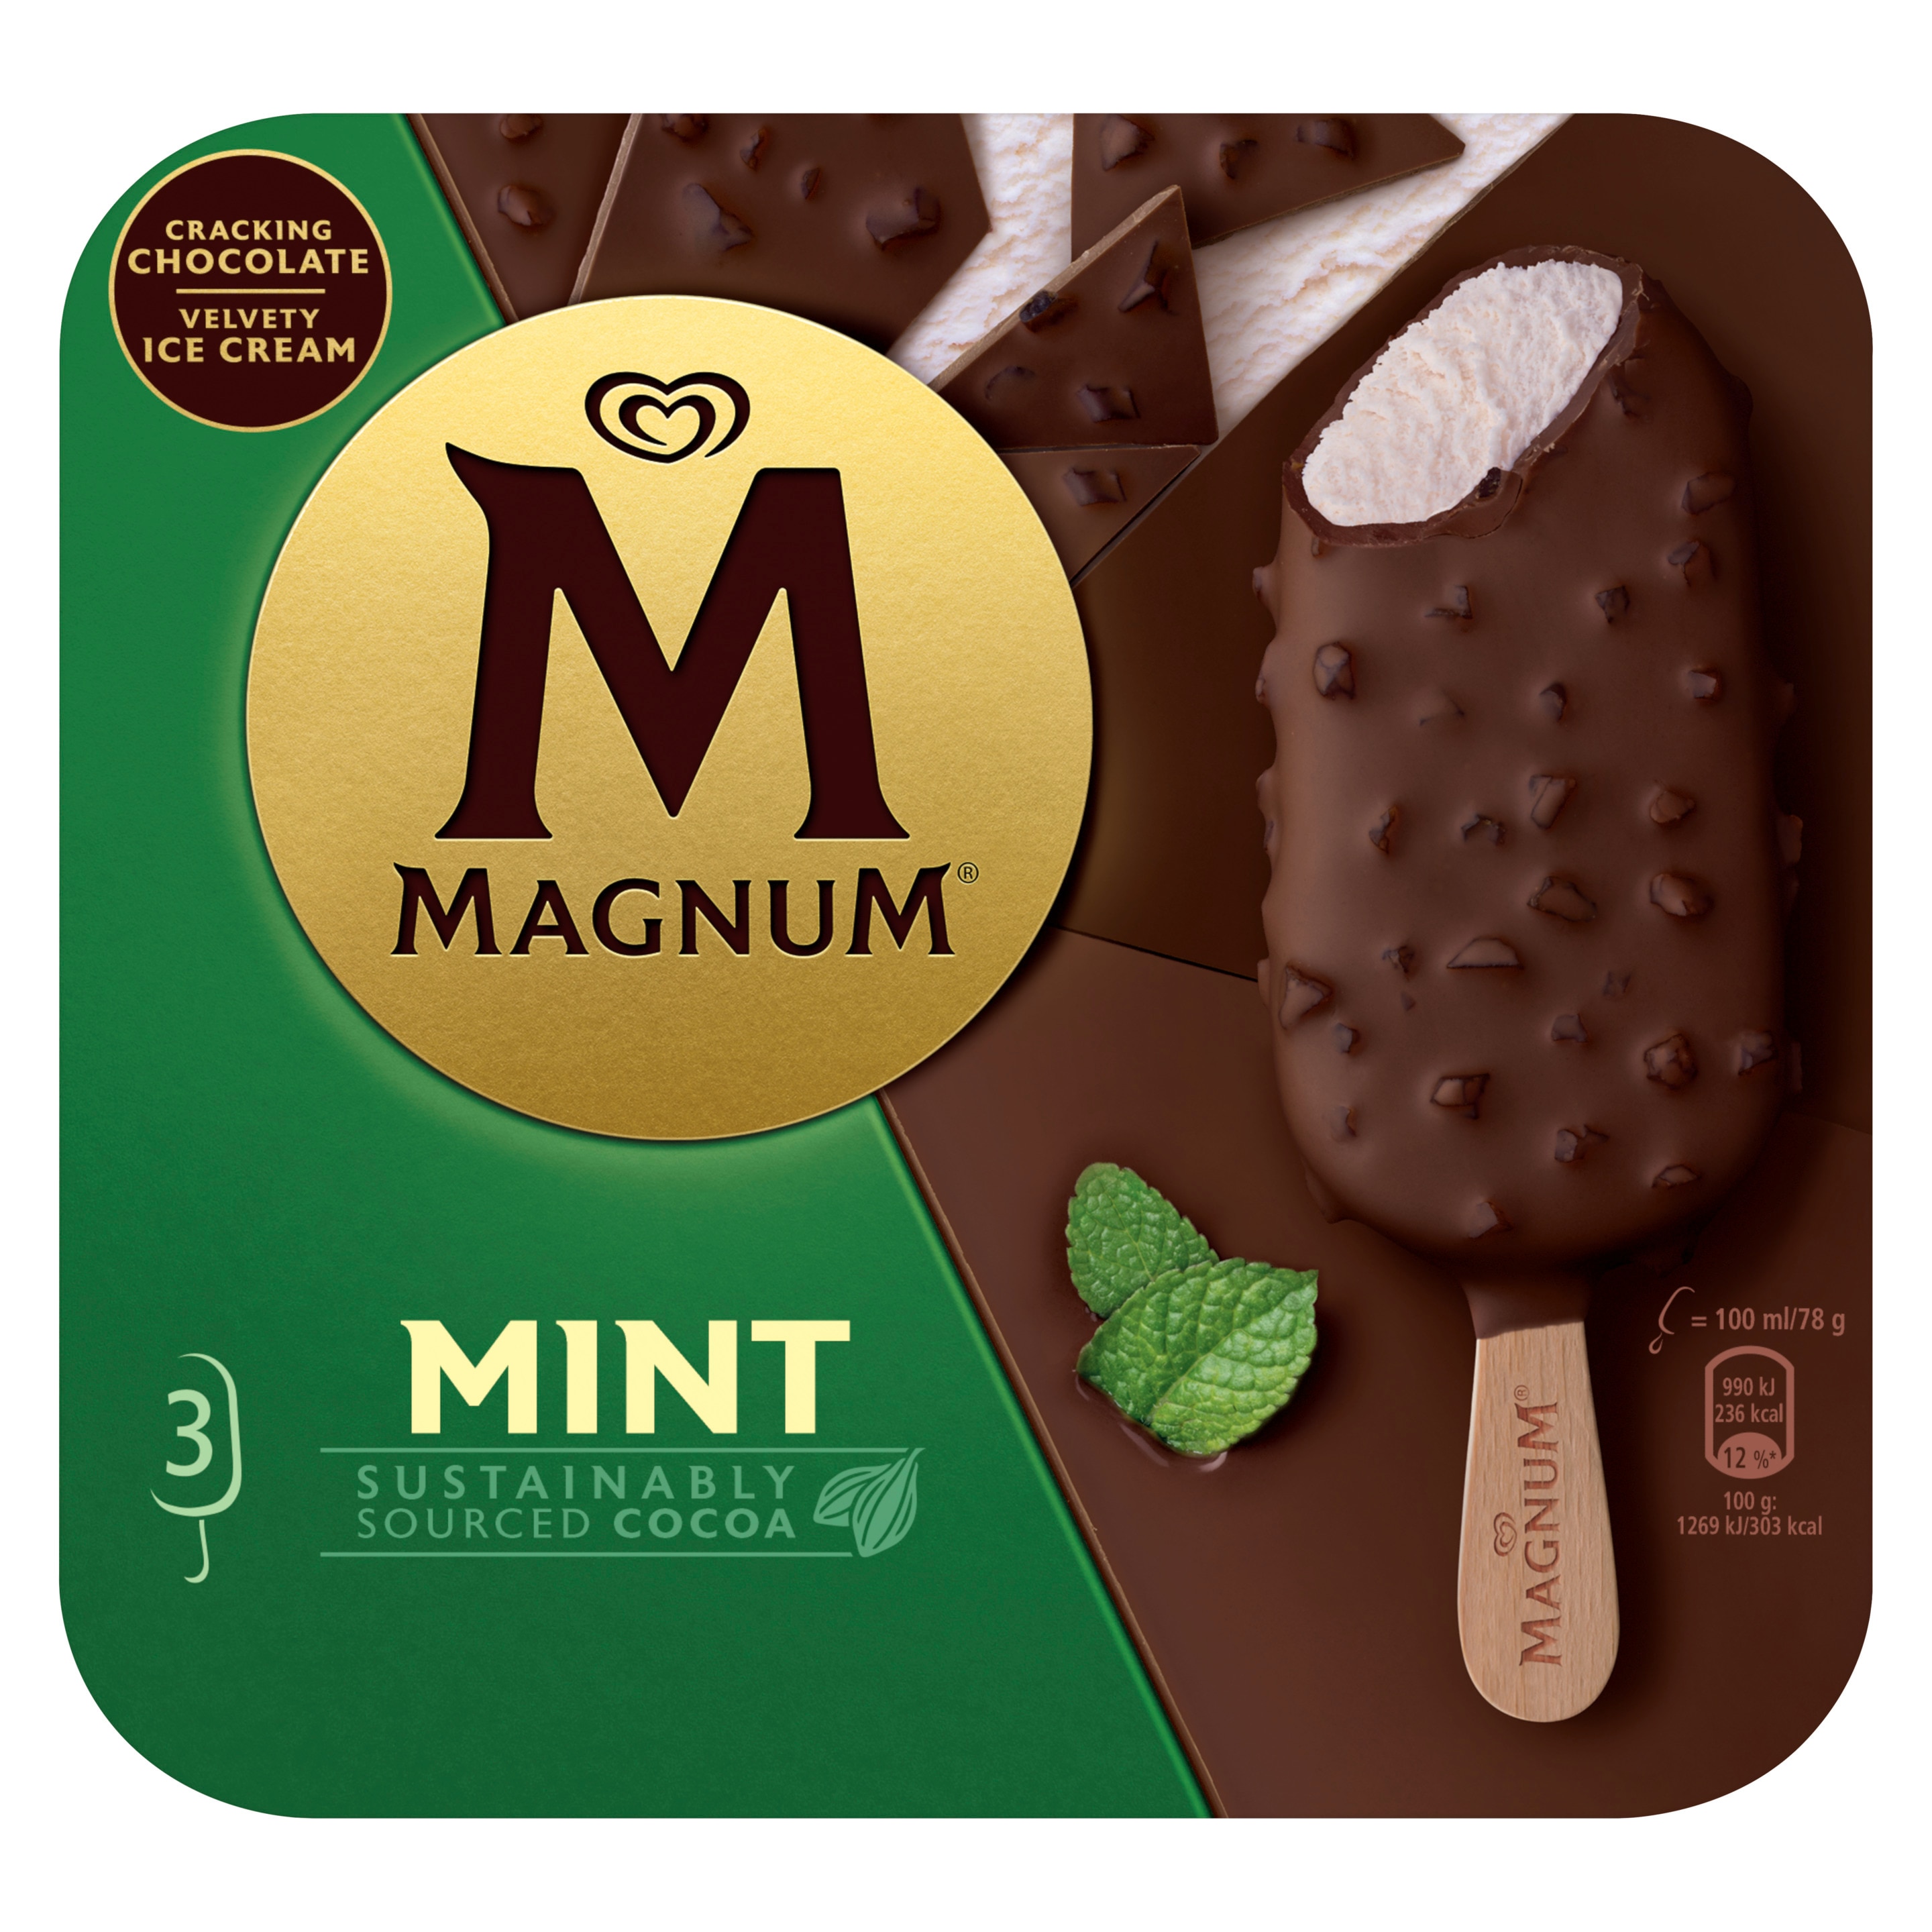 Magnum mint packaging